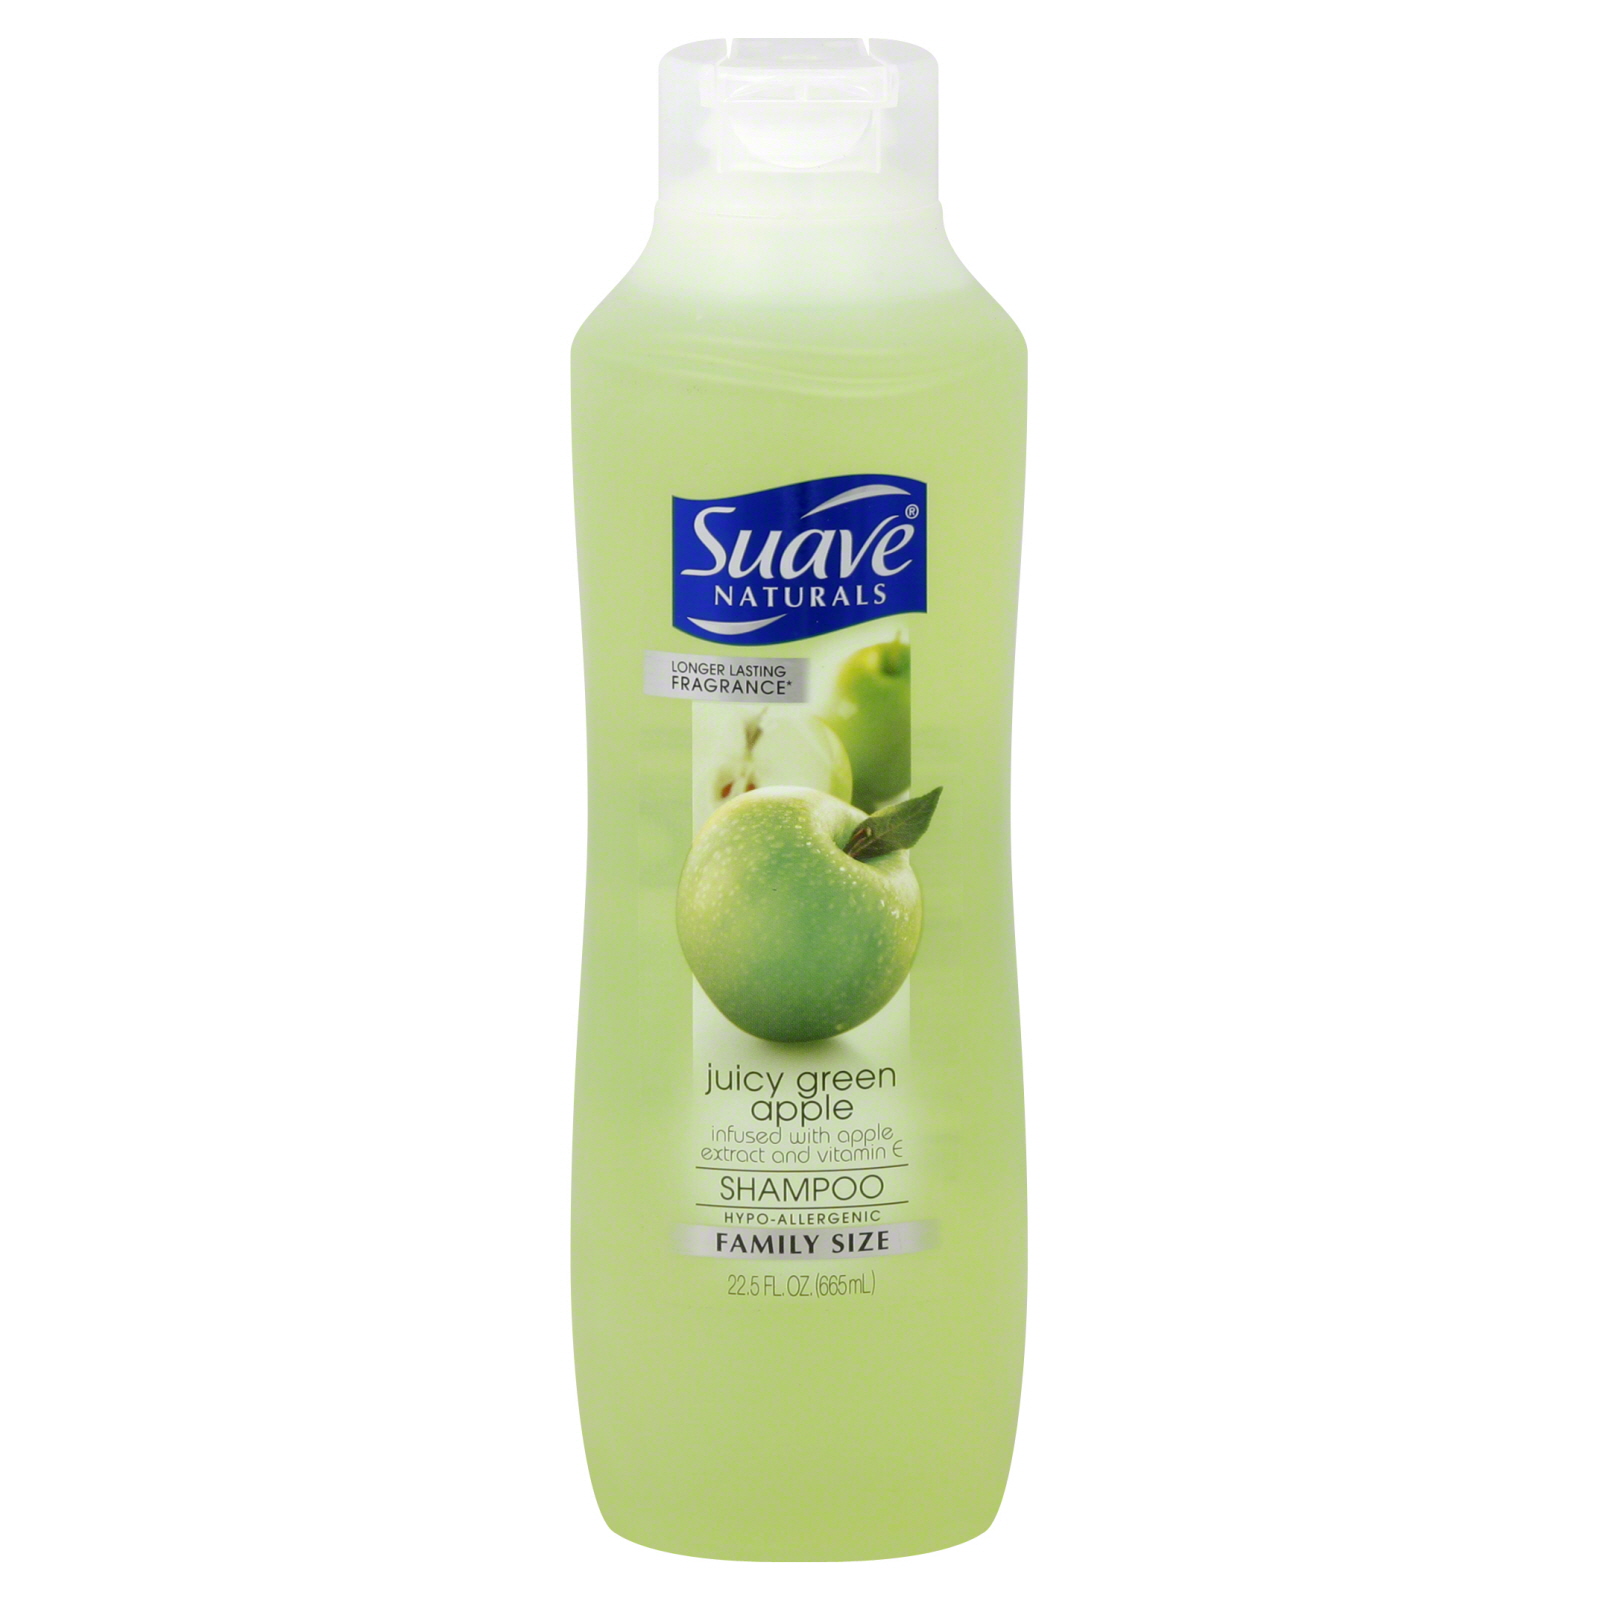 Suave Naturals Shampoo, Juicy Green Apple, Family Size, 22.5 fl oz (665 ml)